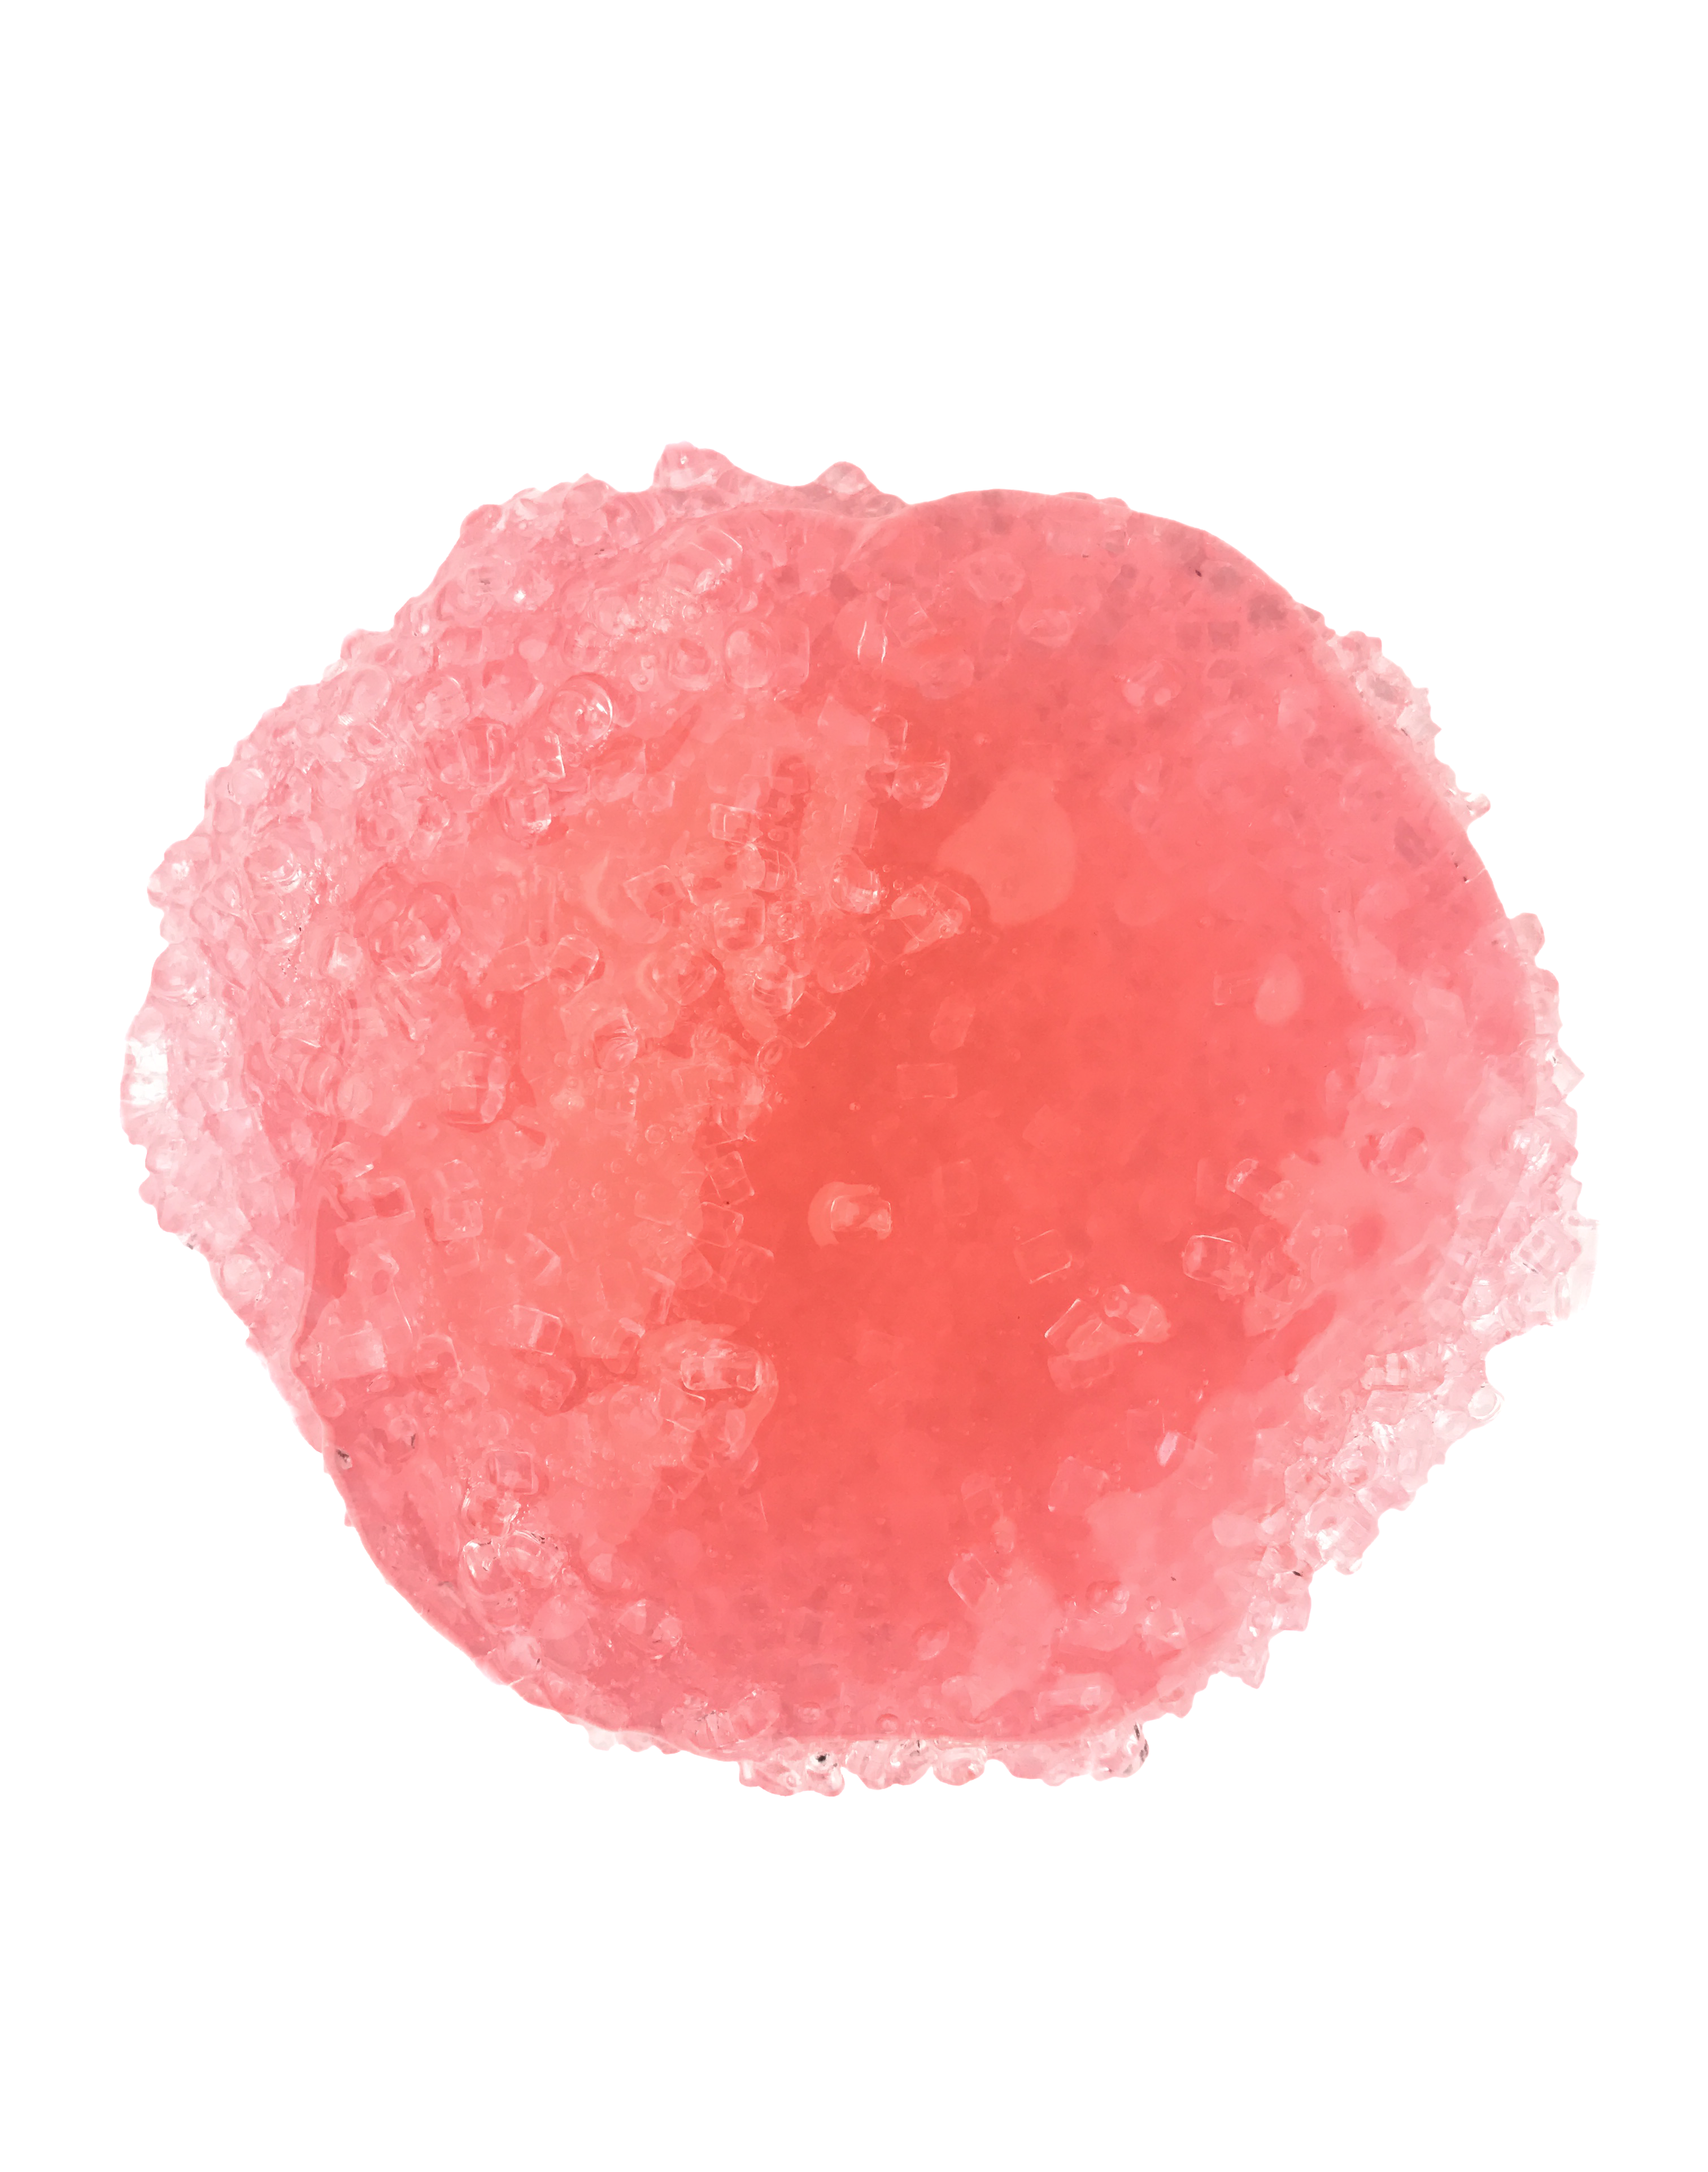 Pomegranate Candy Crunch